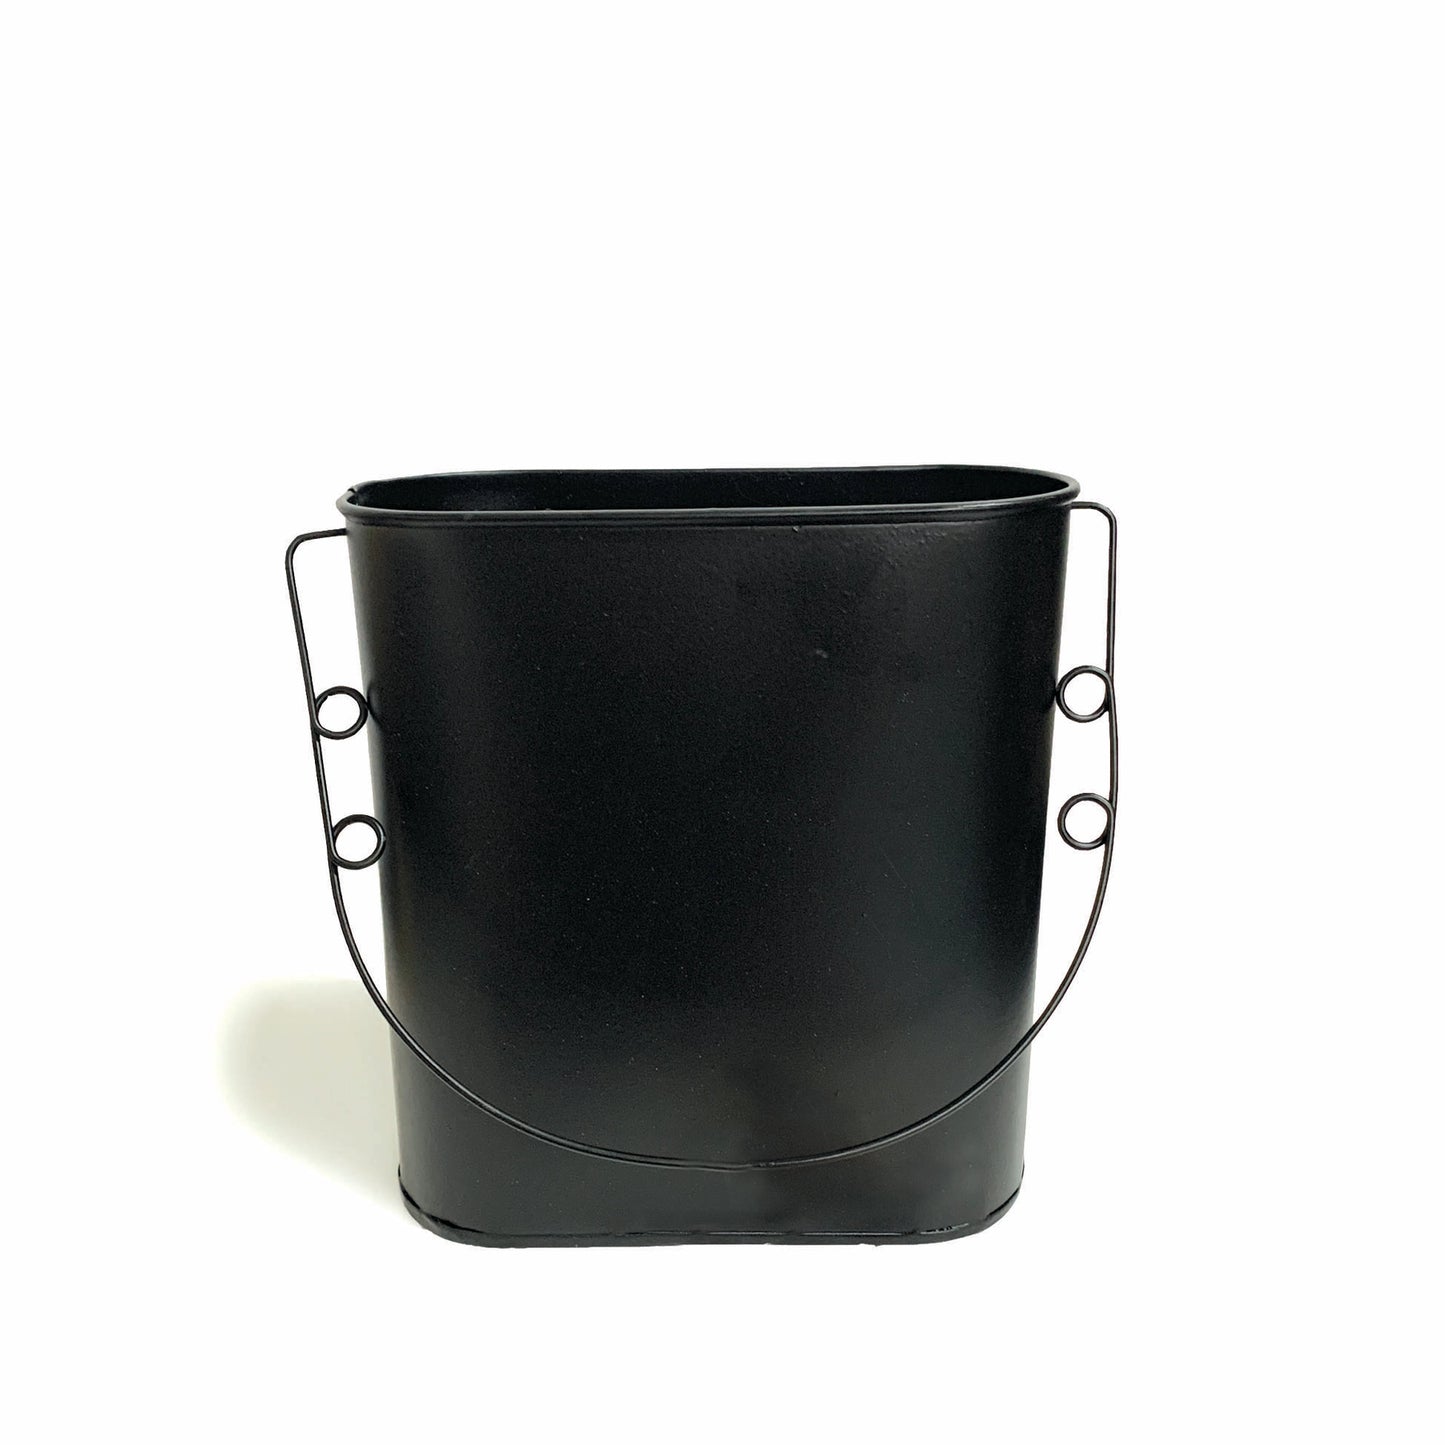 Roeda Black Oval Bucket